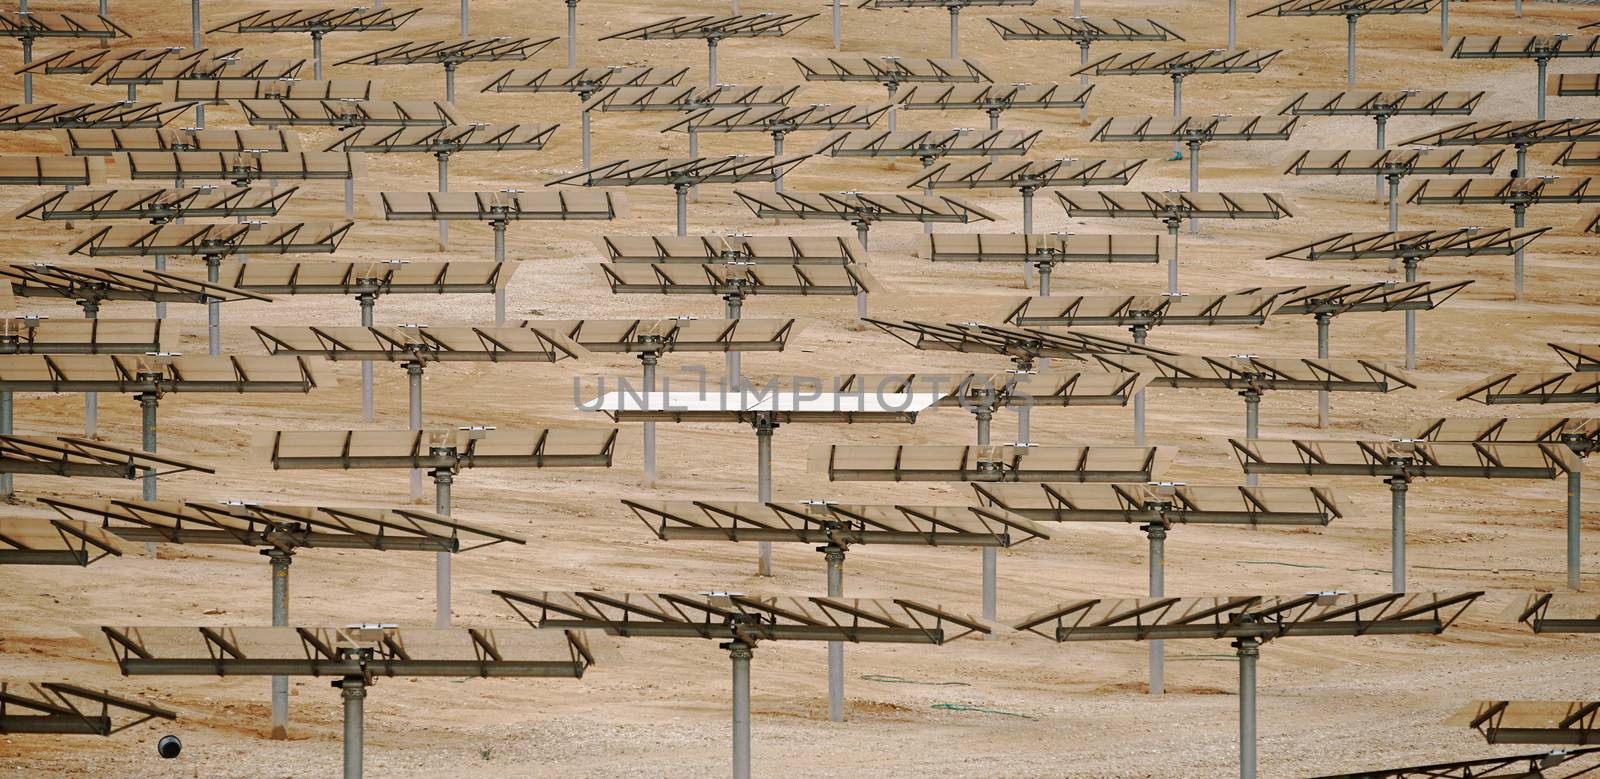 industrial landscape solar batteries  by MegaArt